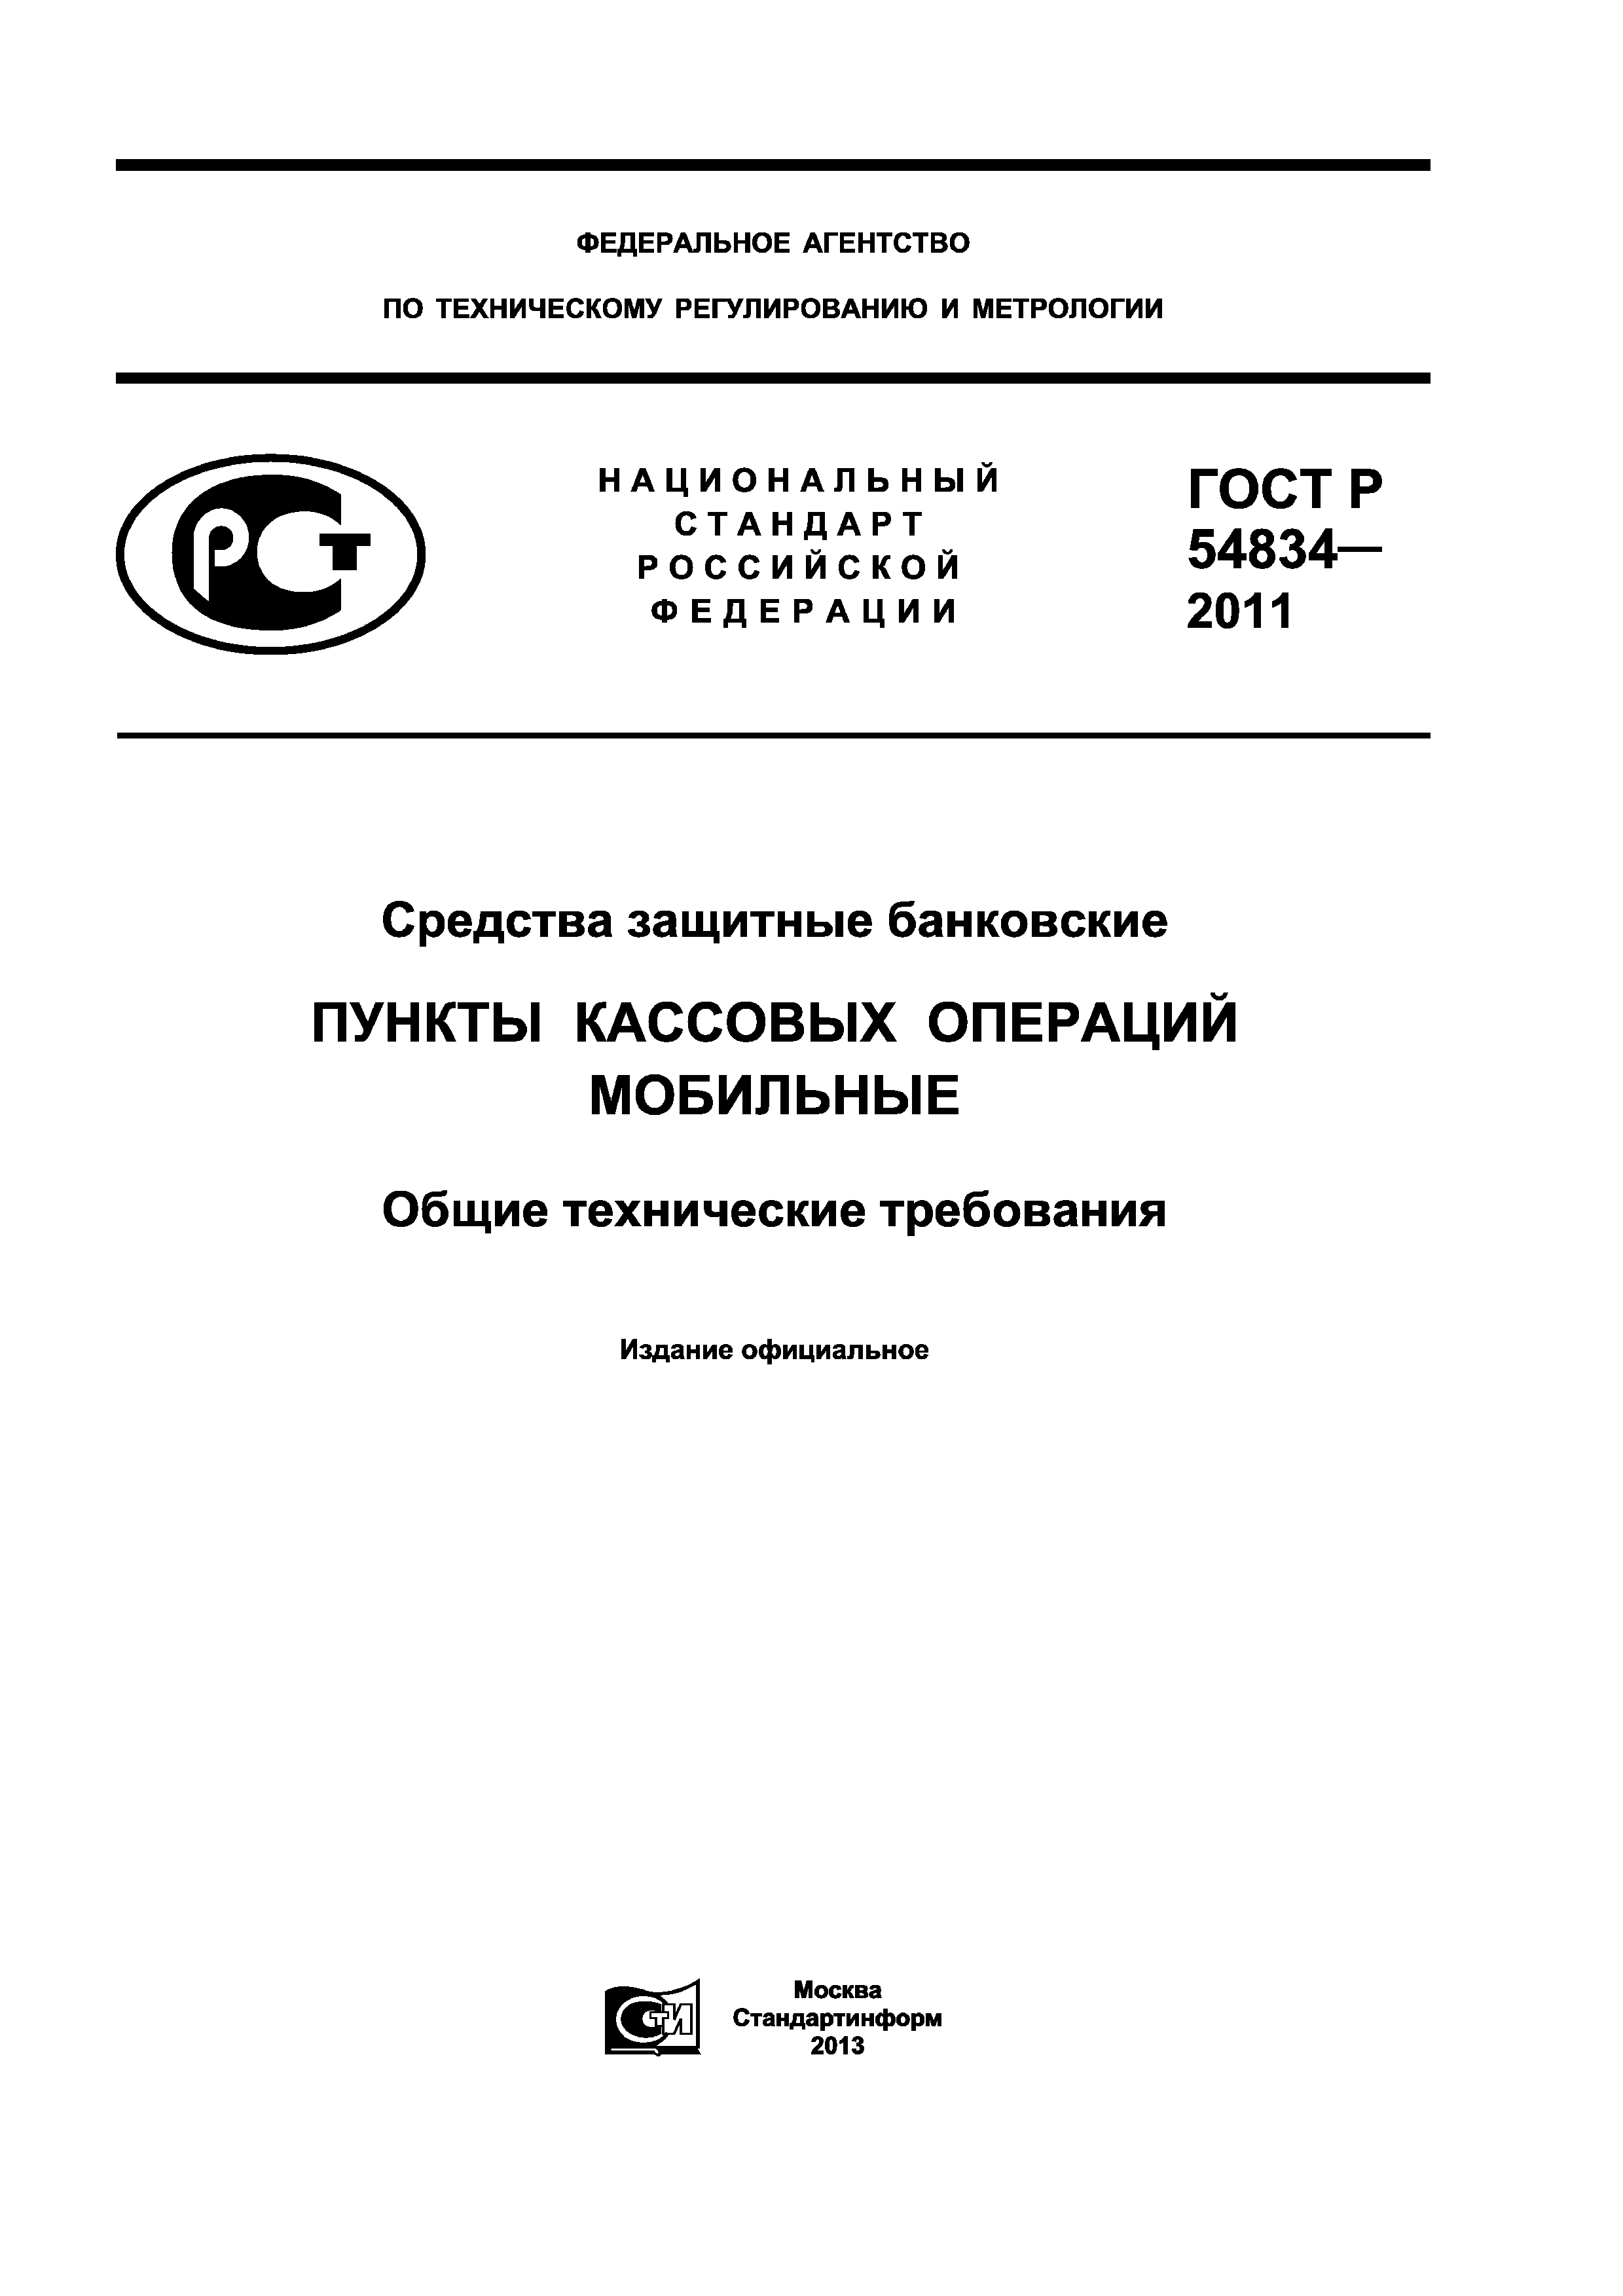 ГОСТ Р 54834-2011